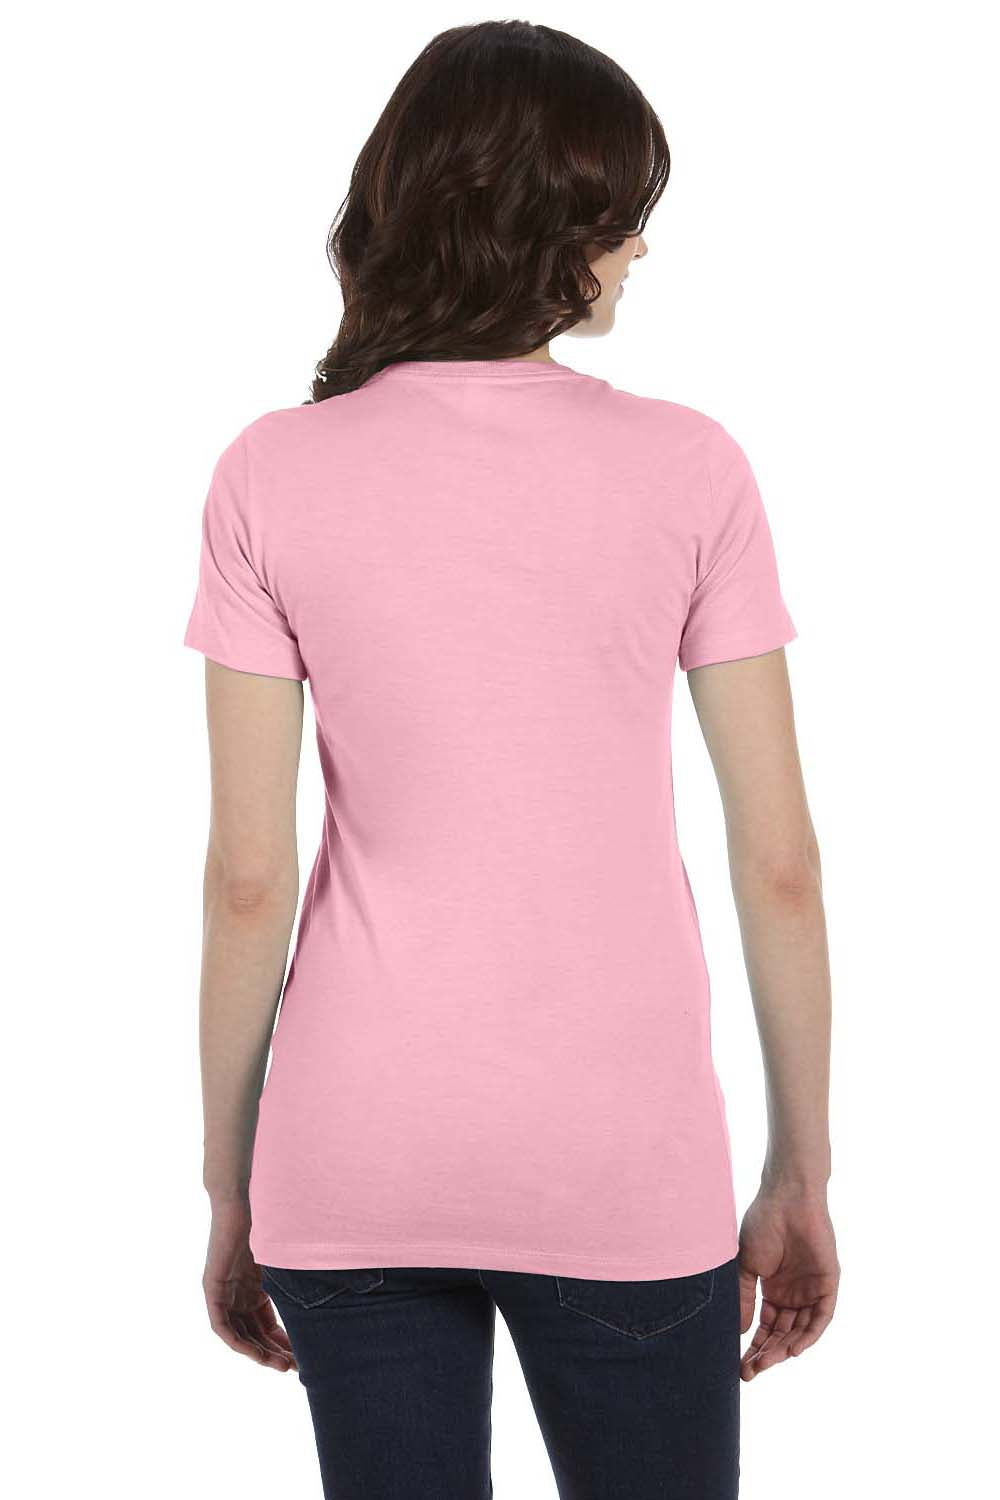 Bella + Canvas BC6004/6004 Womens The Favorite Short Sleeve Crewneck T-Shirt Pink Model Back